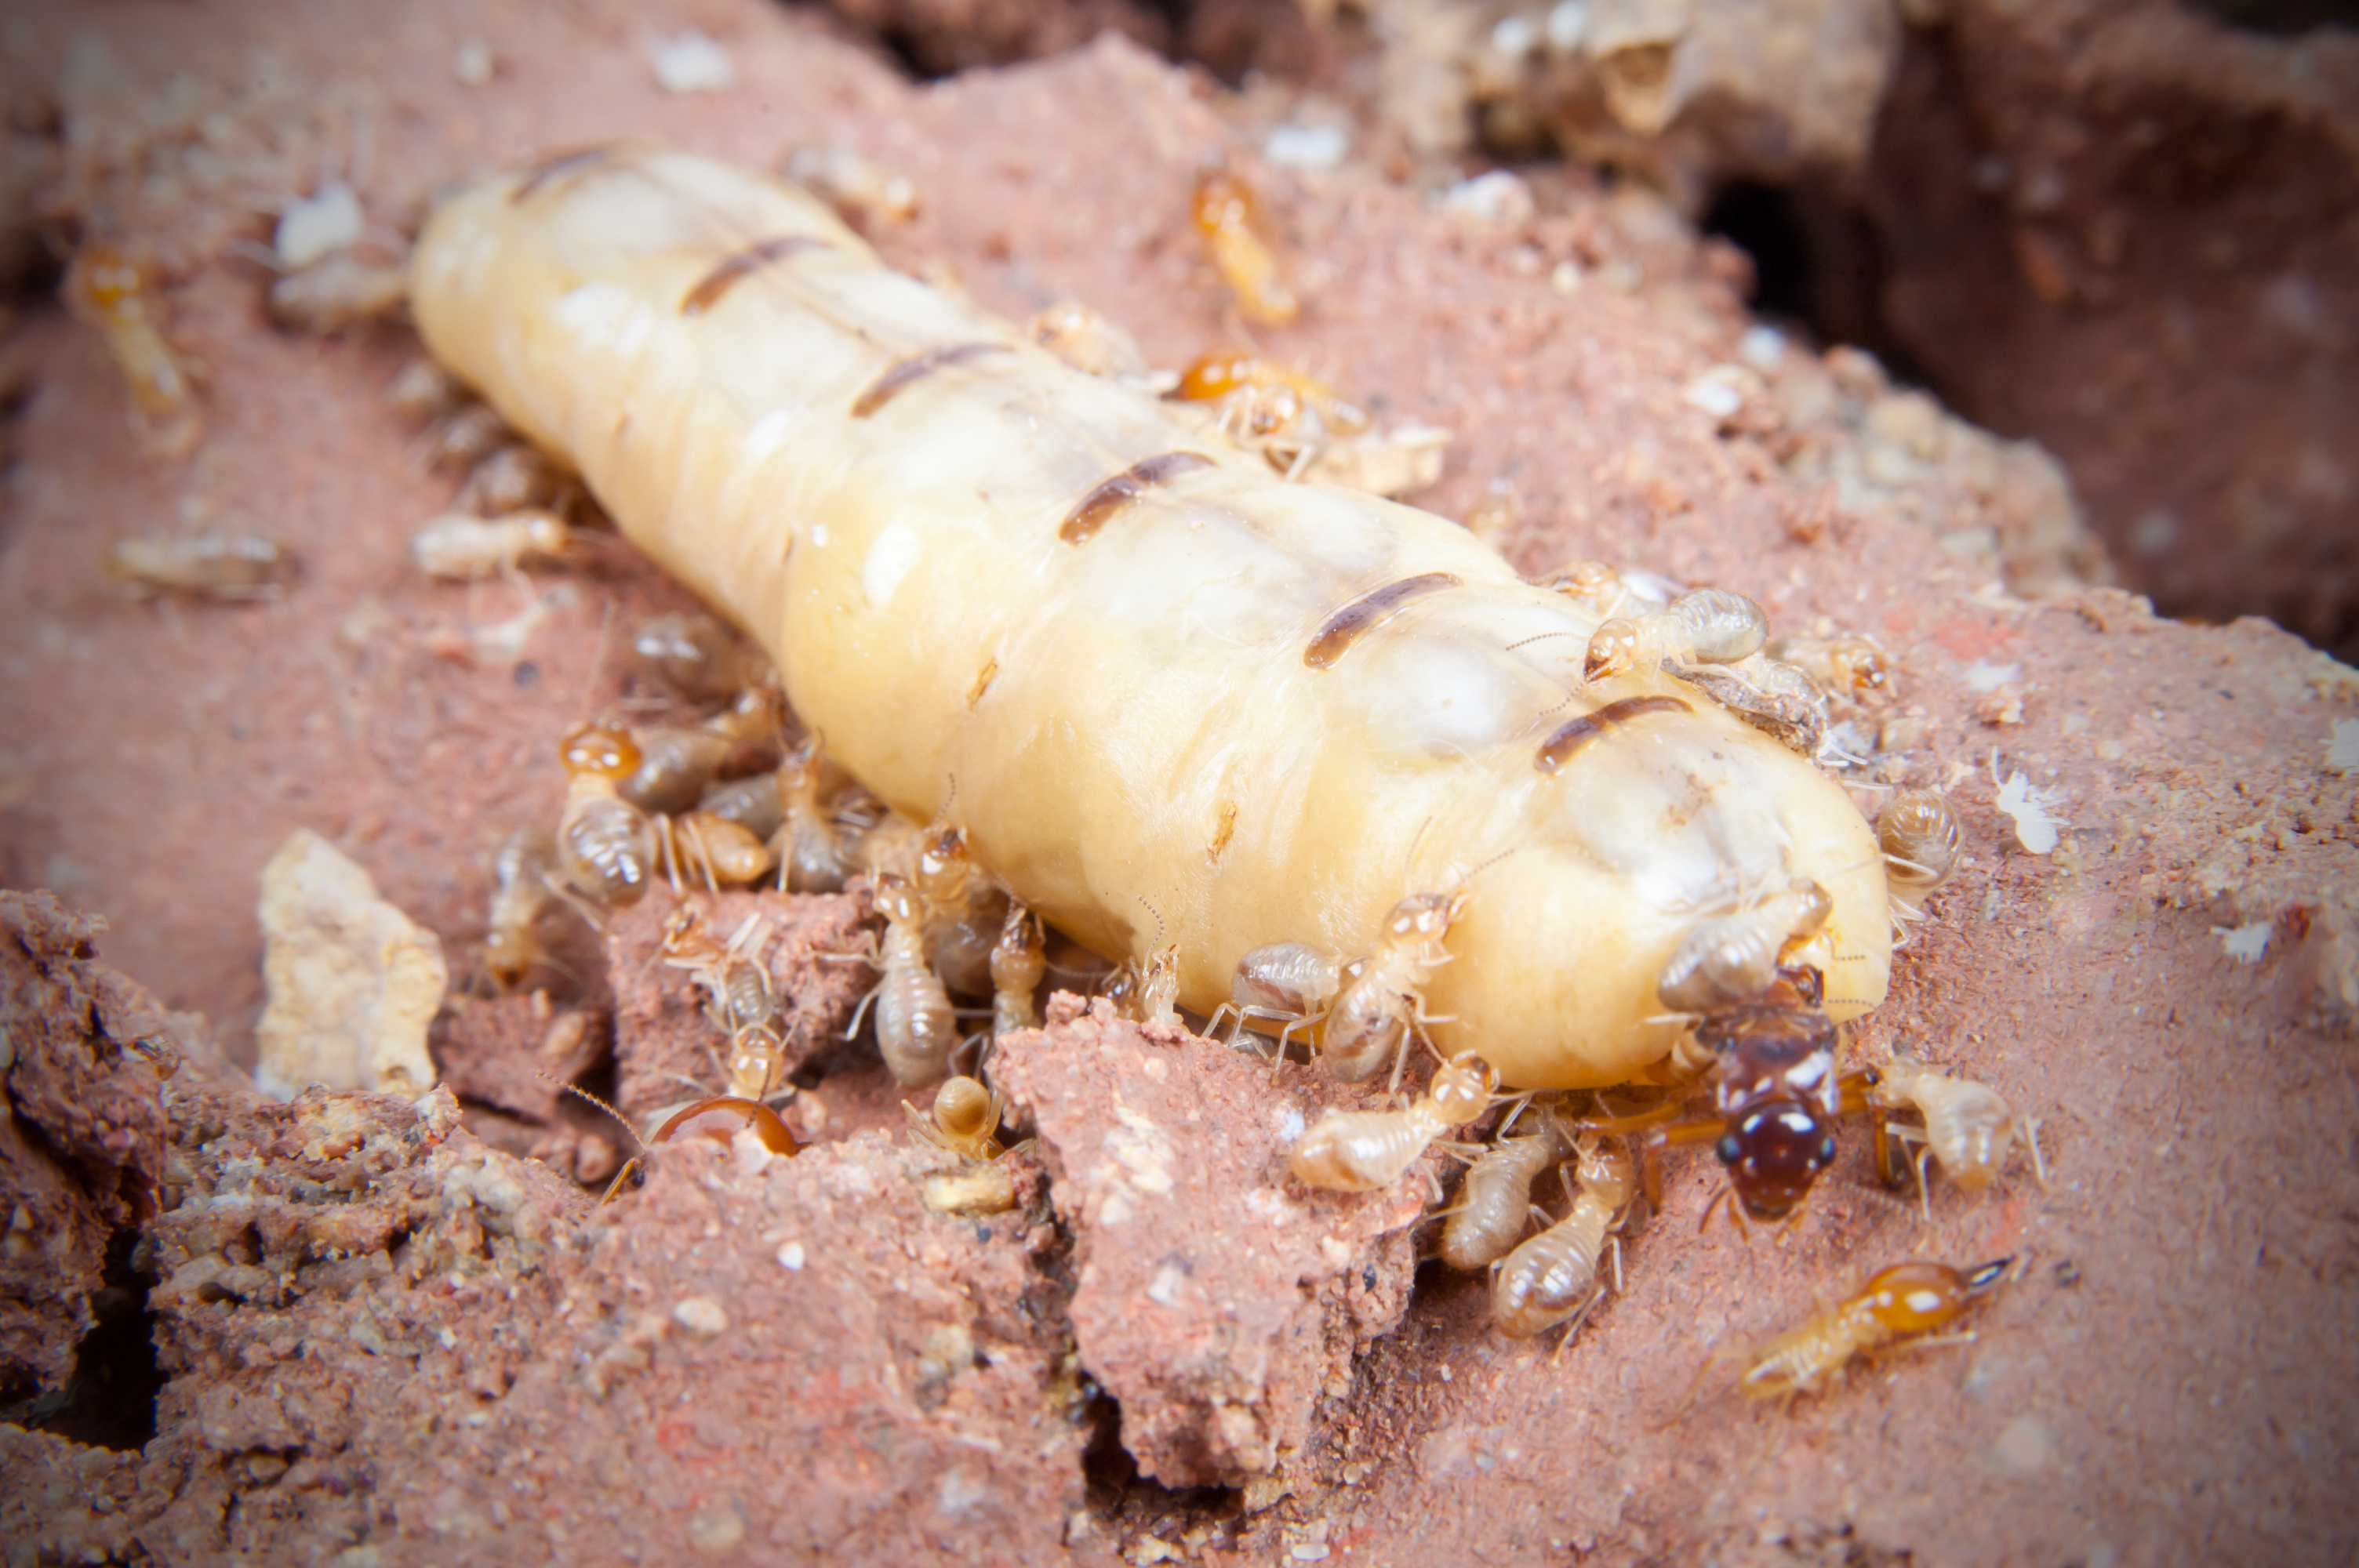 Termites Wallpaper High Quality